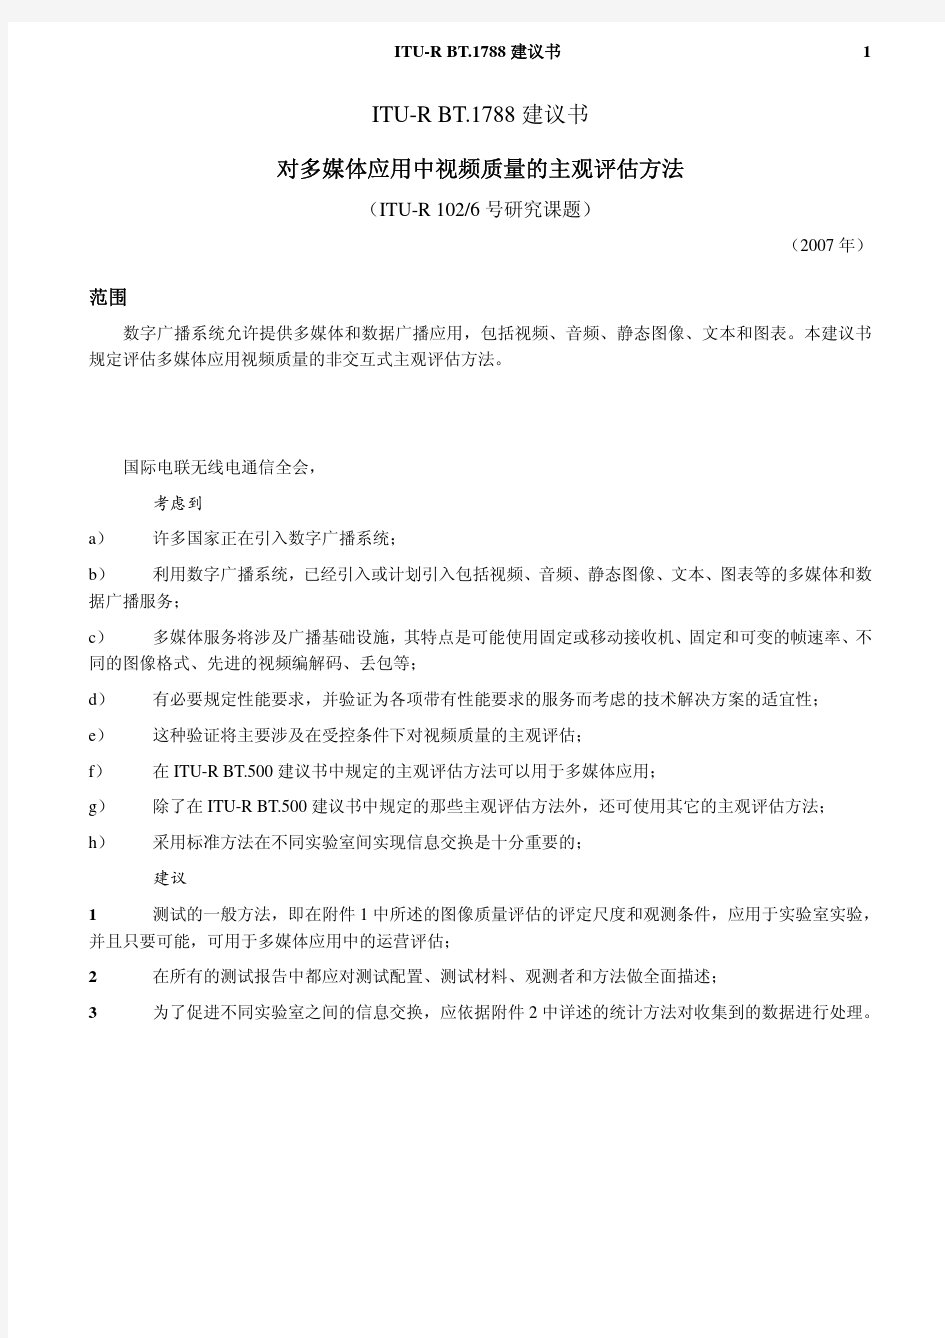 ITU-R BT.1788主观质量评价标准中文版